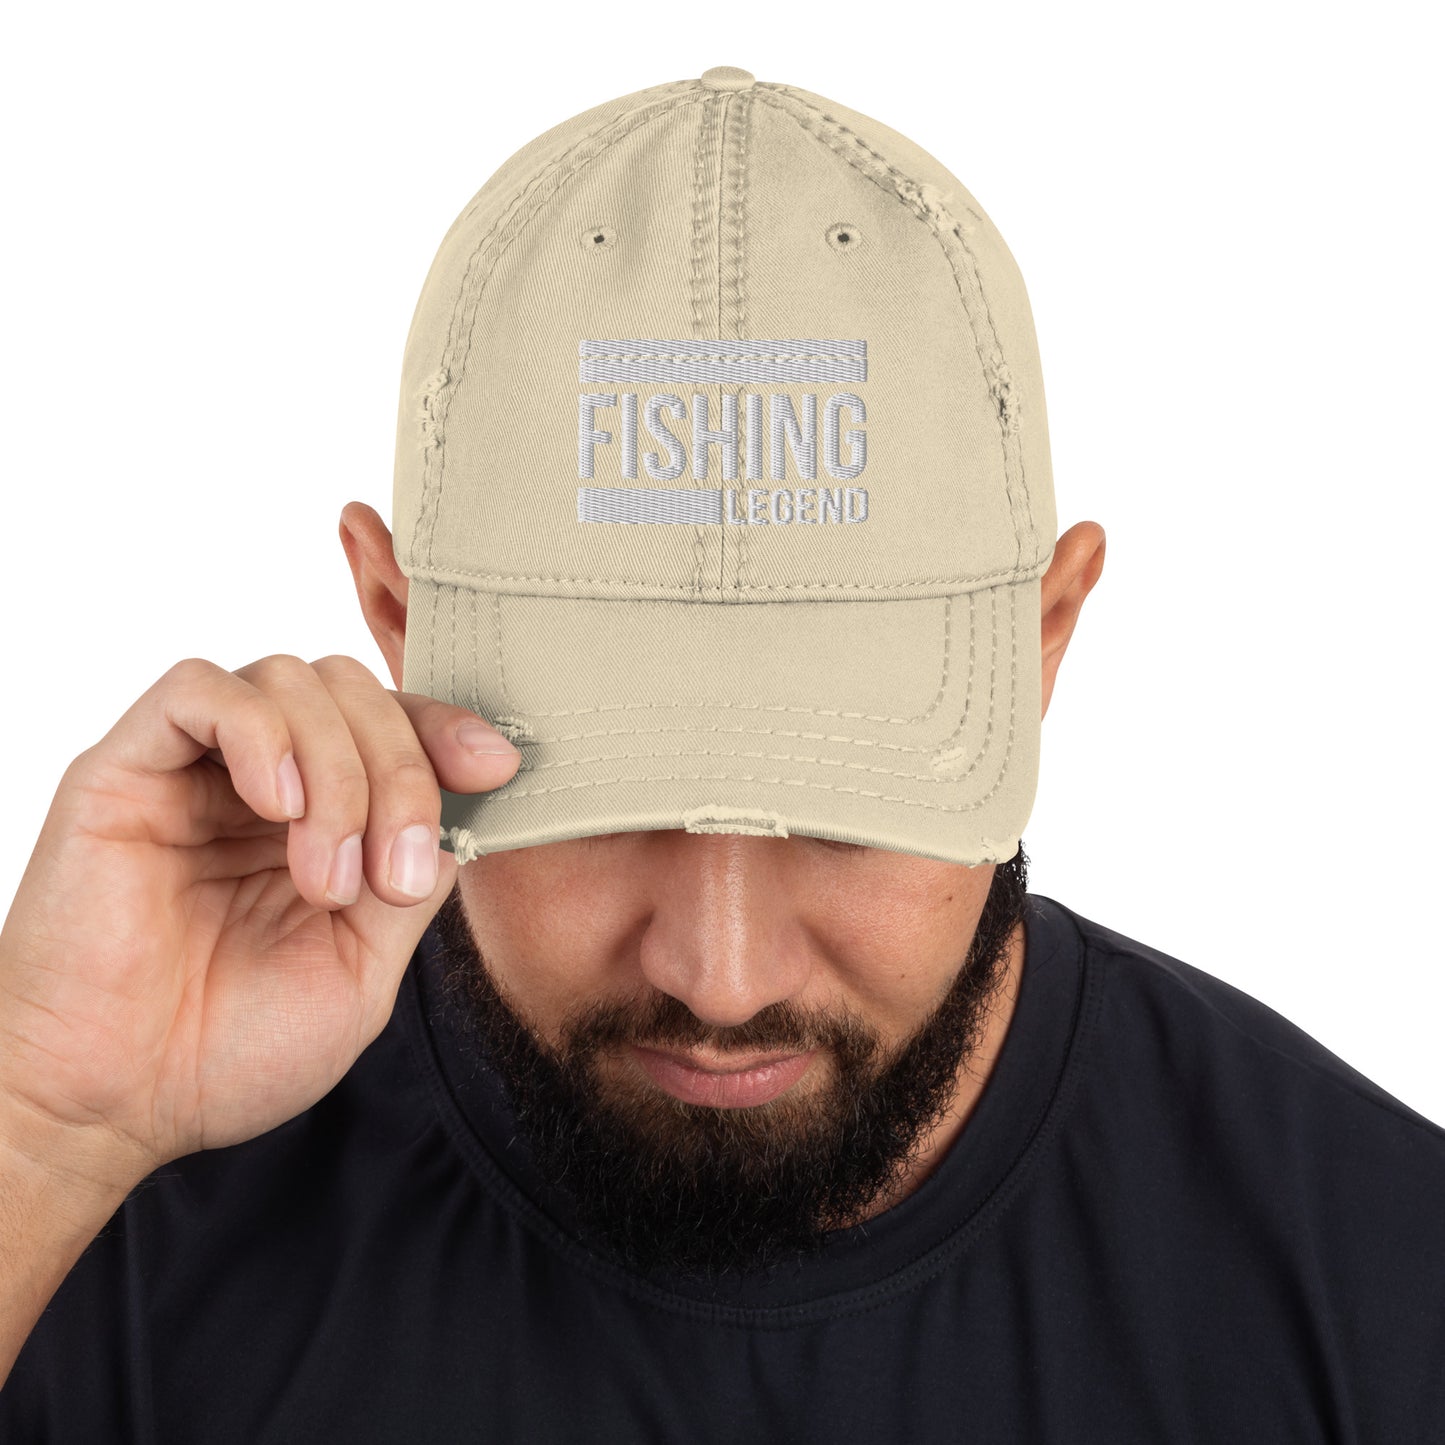 Fishing Legend Distressed Hat